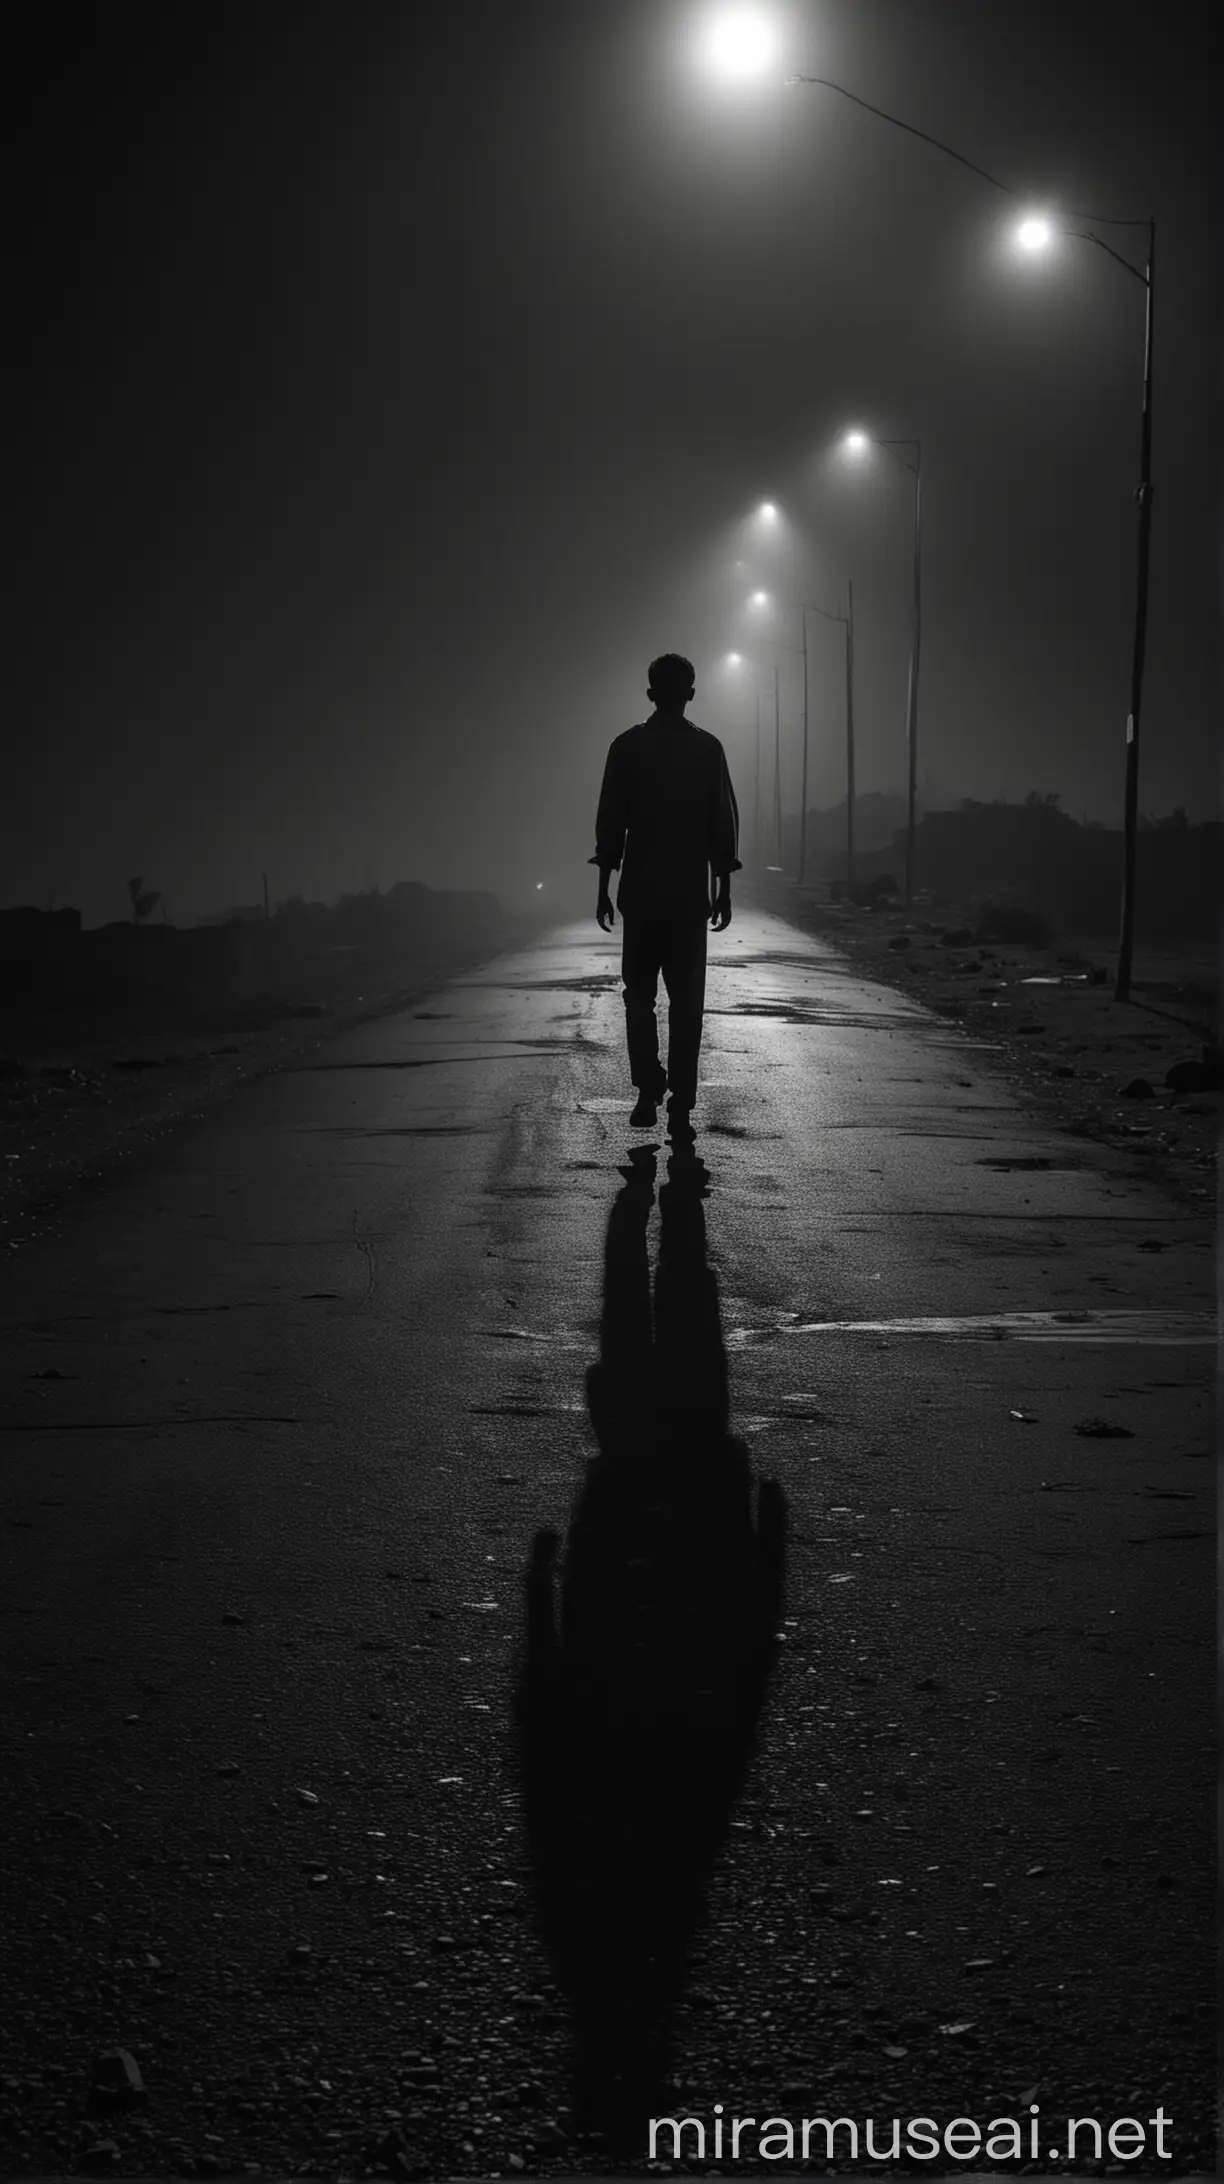 Lonely Figure Walking on Eerie Night Road with Sparse Streetlights